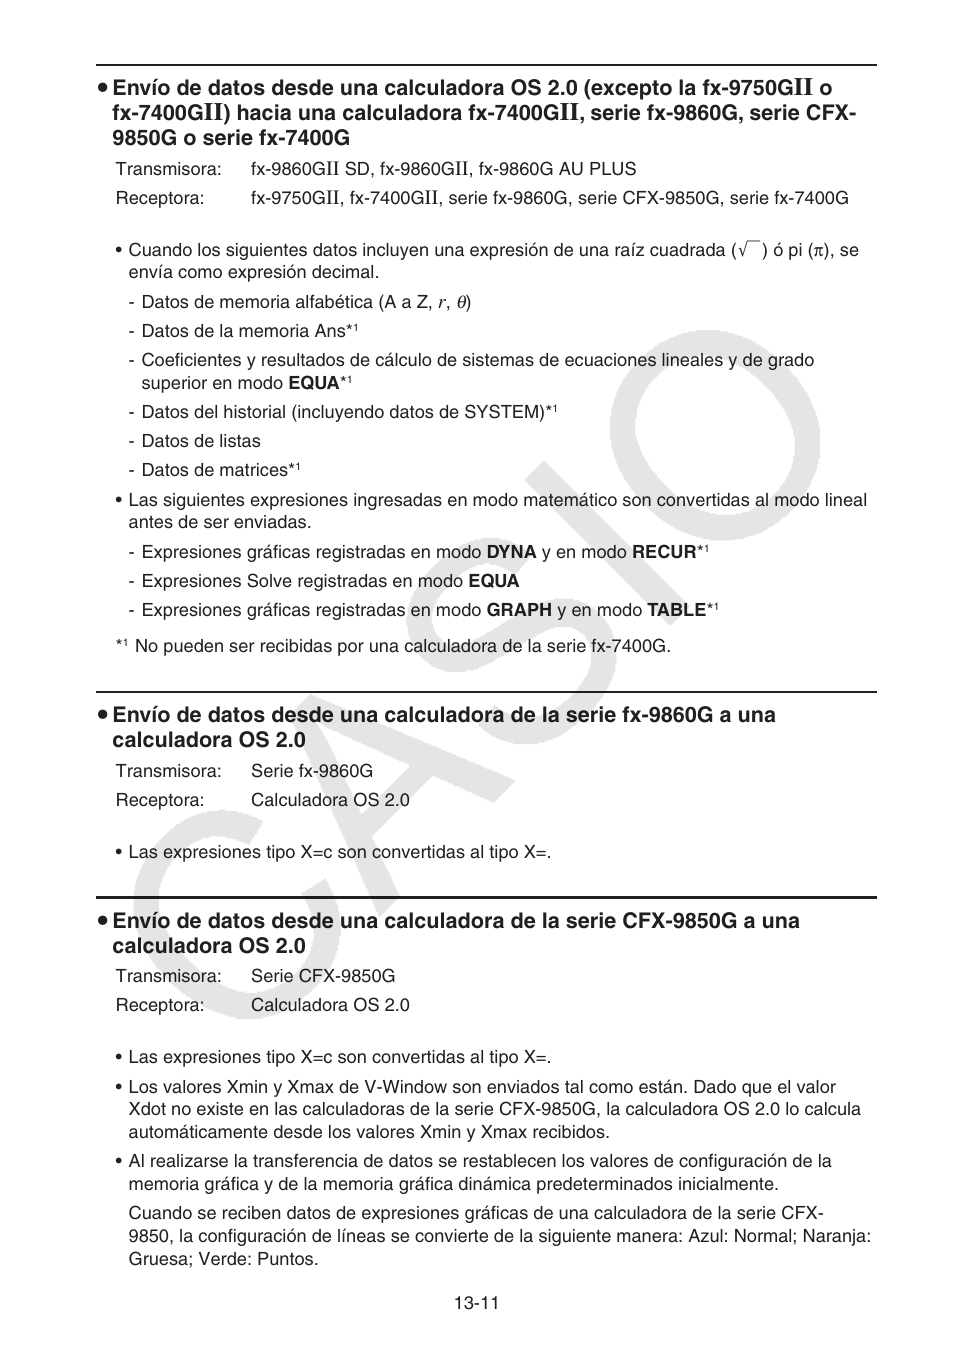 Casio FX-9750GII User Manual | Page 322 / 411 | Original mode | Also for: fx-9860G  AU PLUS, FX-9860G, fx-9860G SD, FX-9860GII, fx-9860GII SD, fx-9860G AU, FX -7400GII